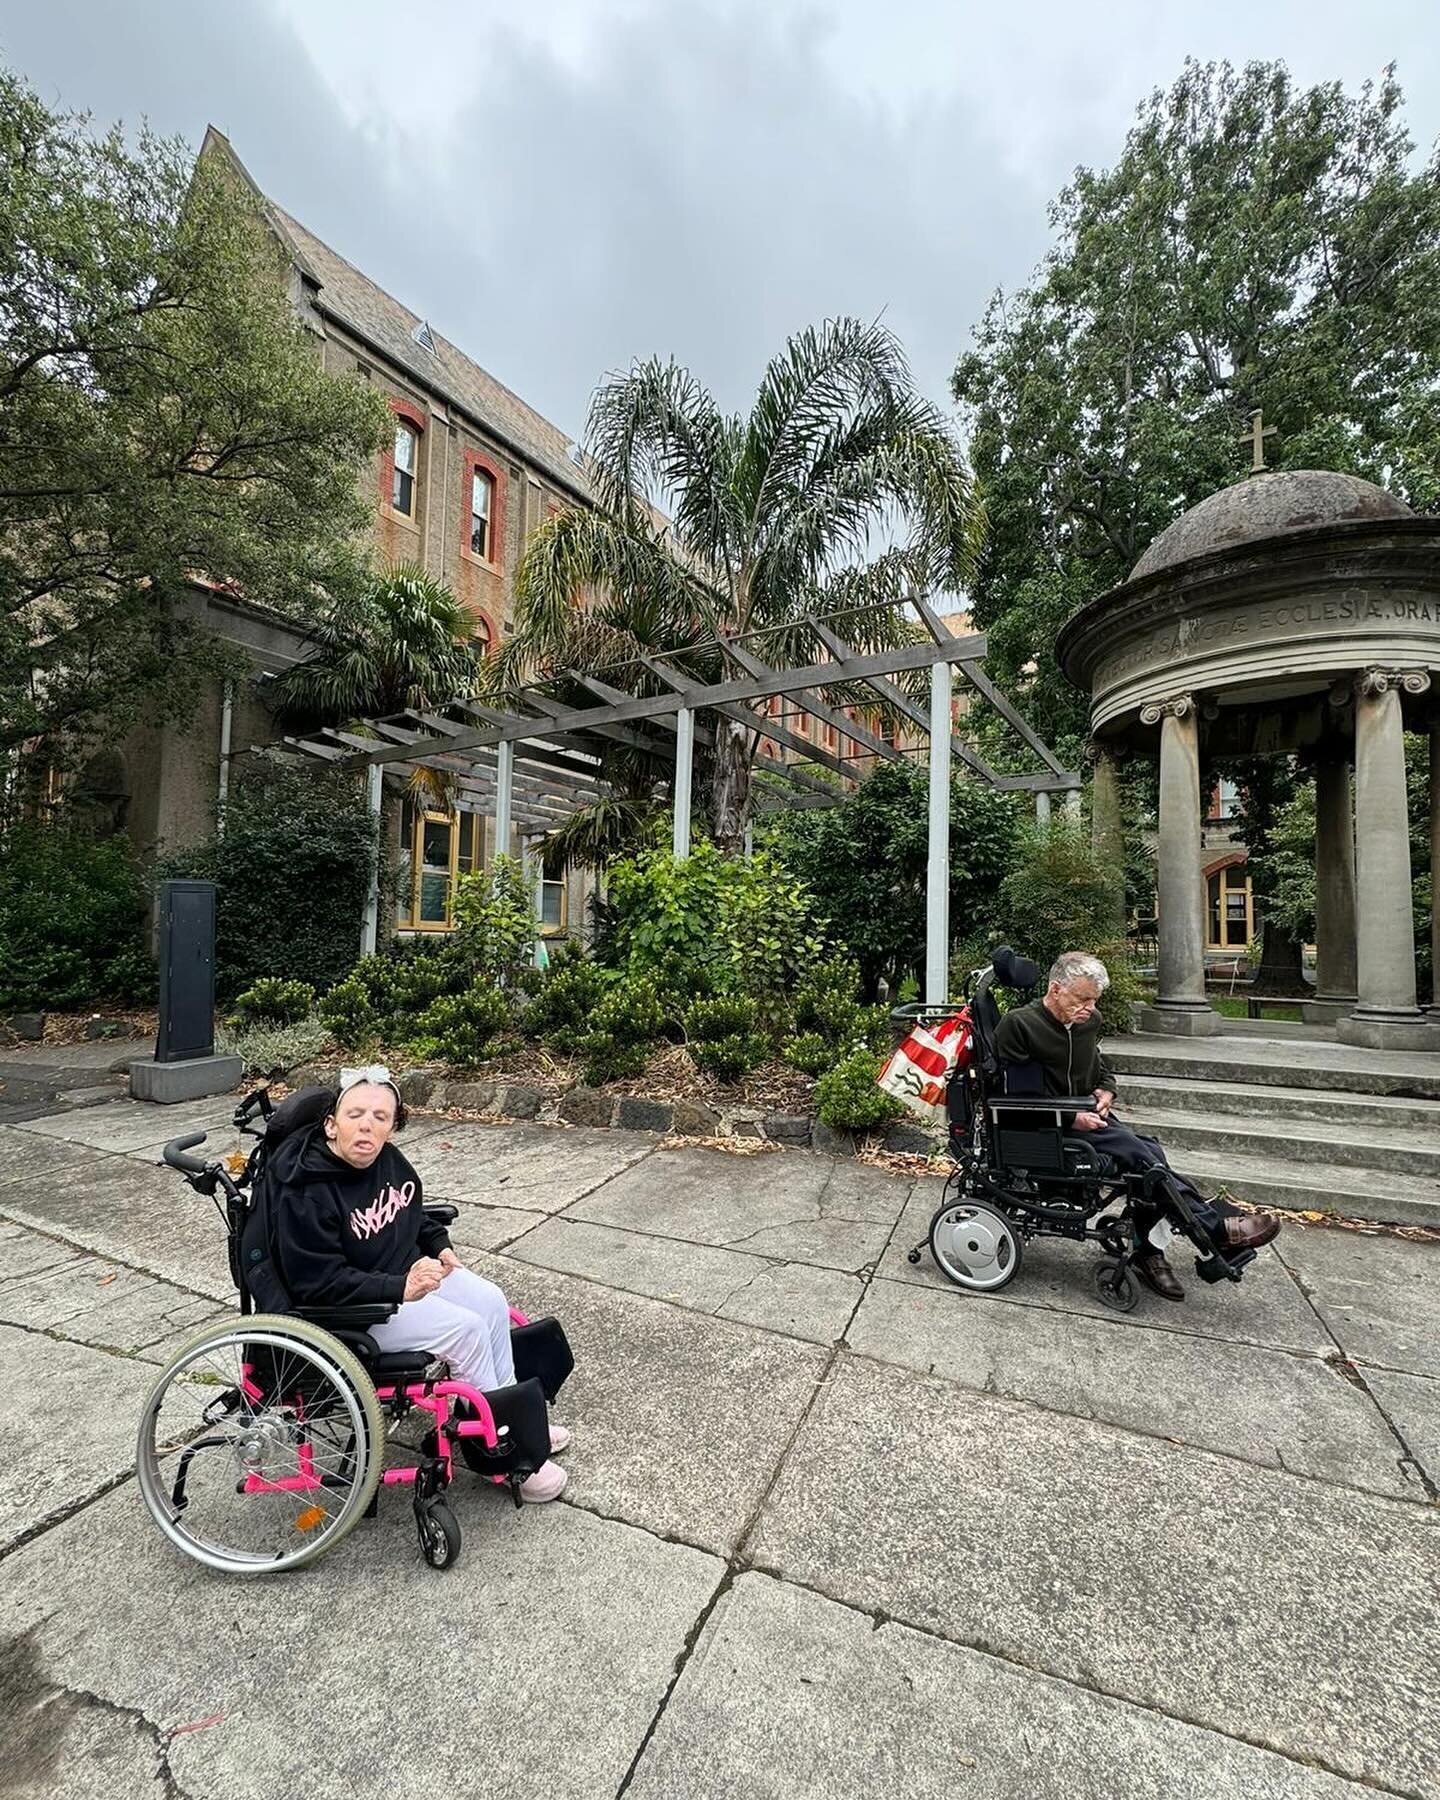 Exploring with Carola and Wayne! 🔍 👋

🏷️ 
#smallbusinessmelbourne #smallbusinessvictoria #ndis #ndissupport #ndisaustralia #ndissupportcoordination #supportcoordination #disabilityawareness #disabilityinclusion #disabilitysupport #disabilityadvoca